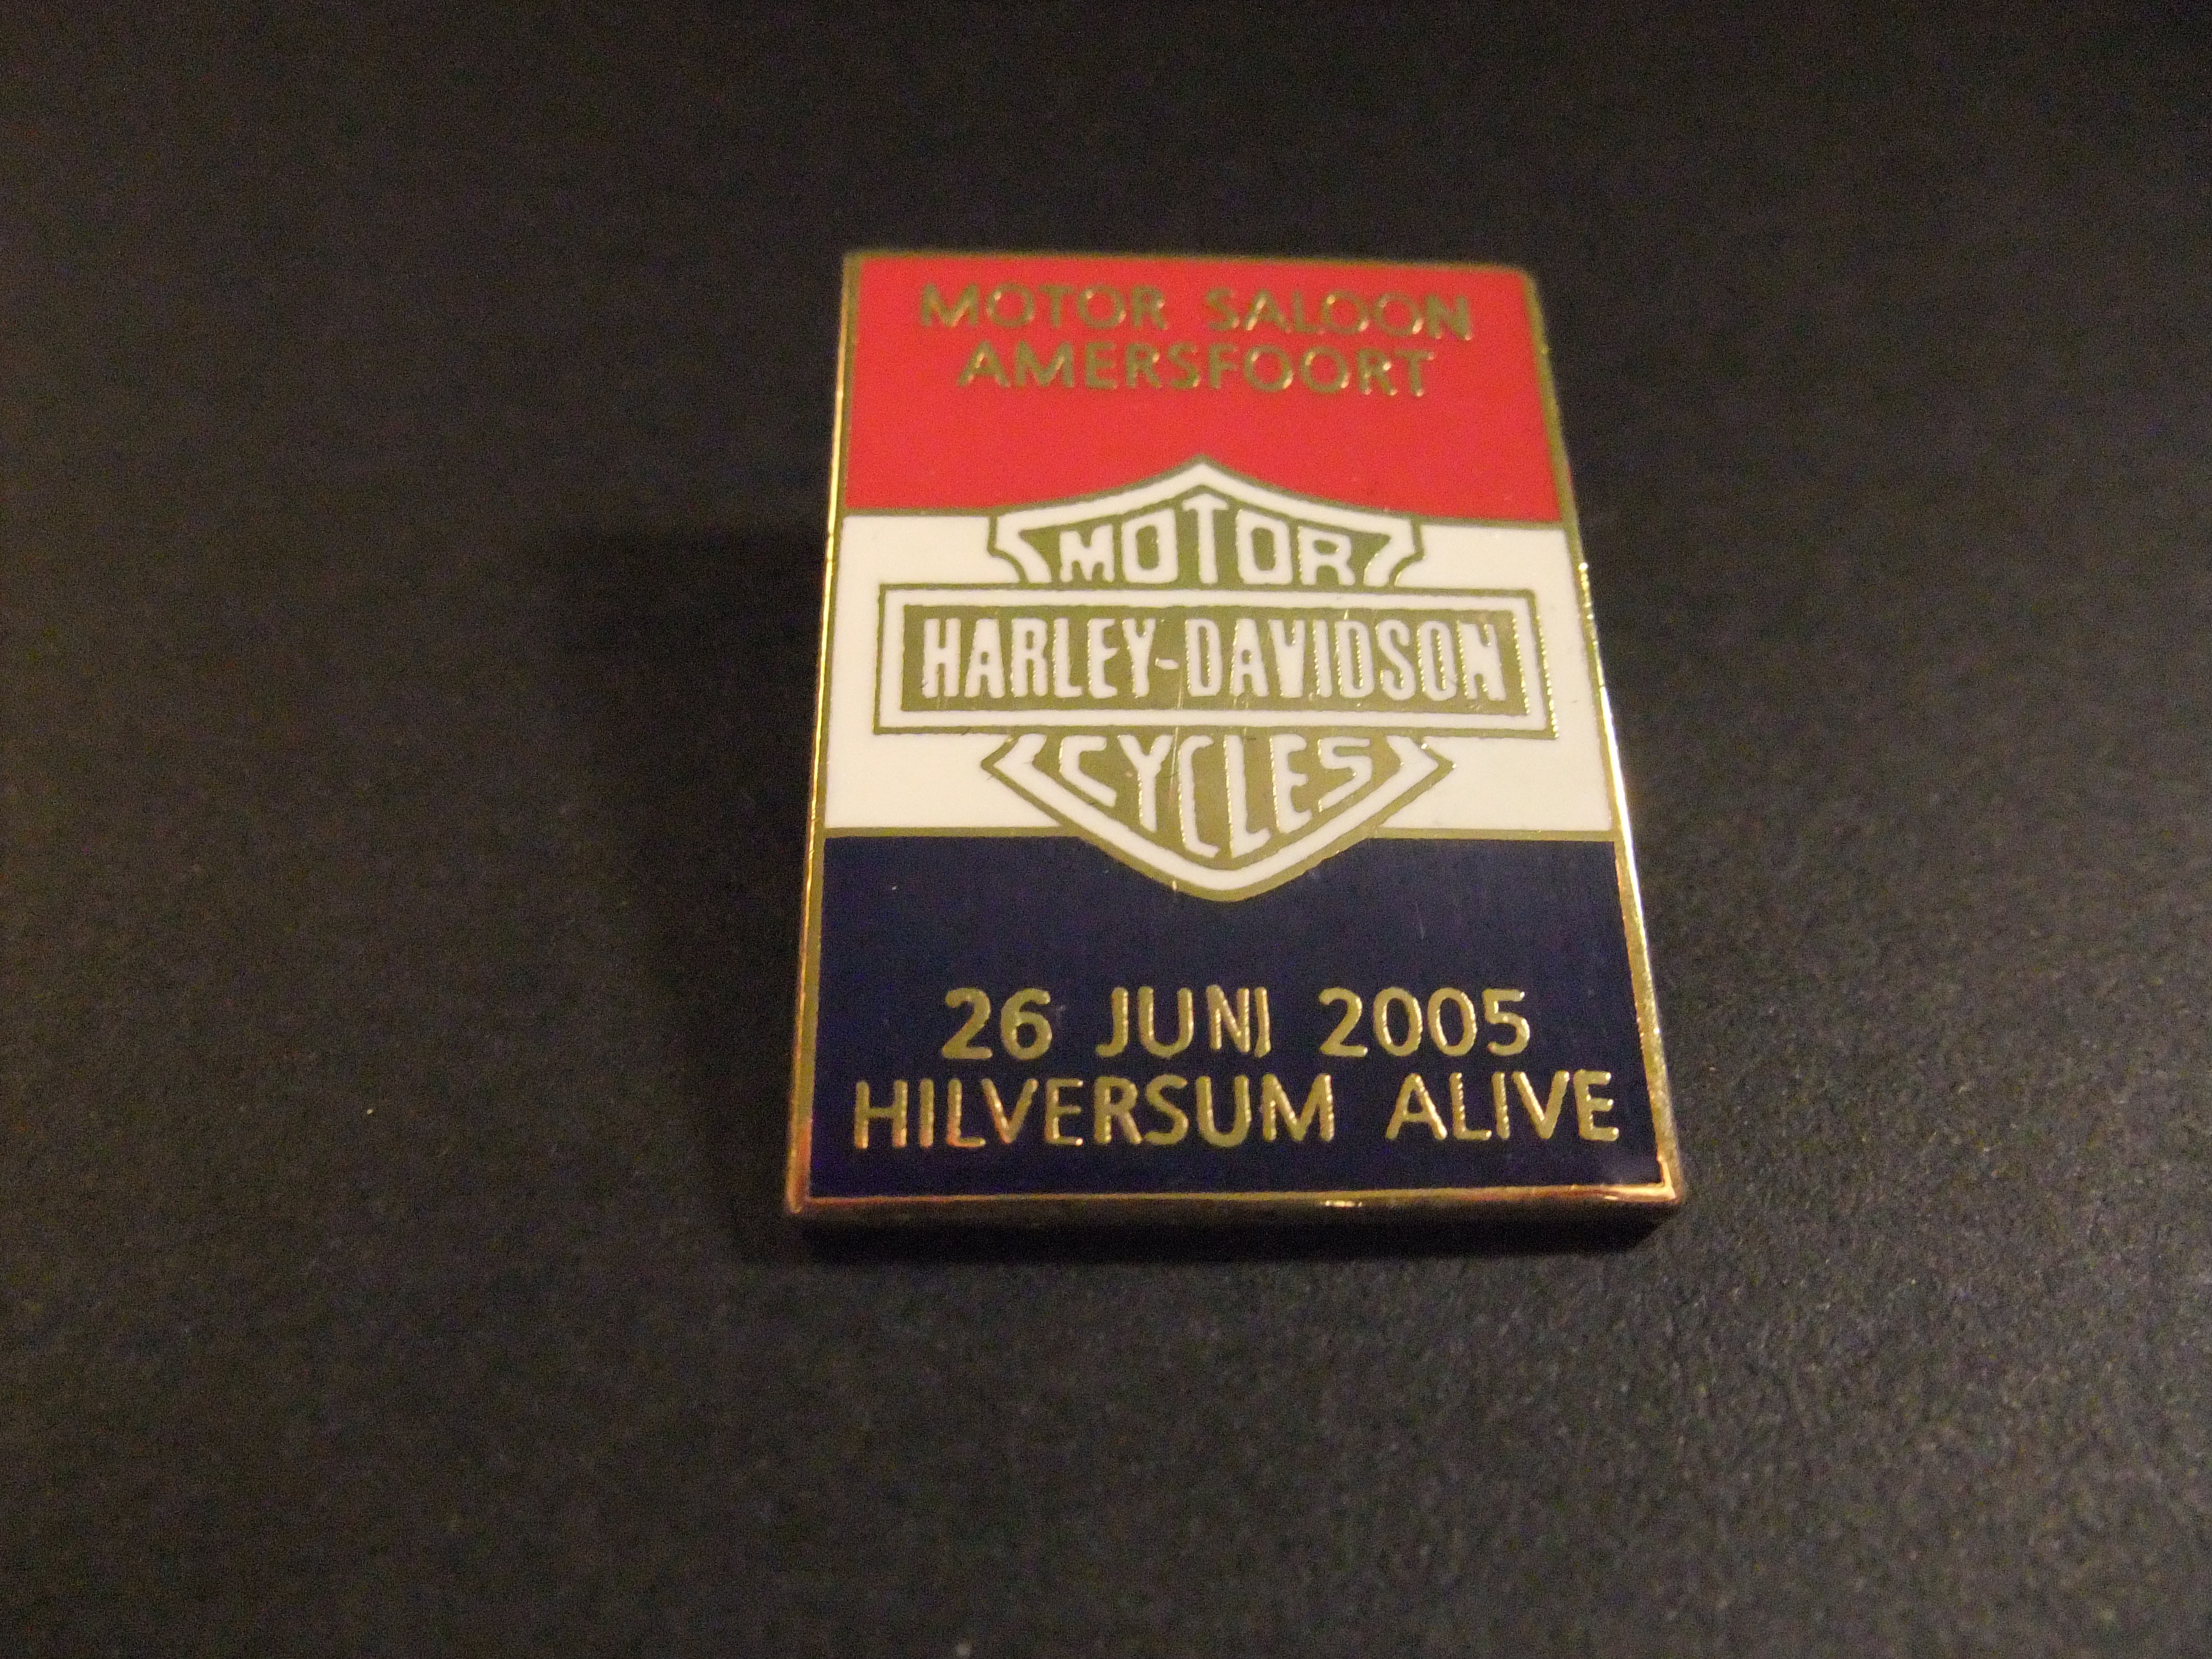 Motor Saloon Amersfoort ( Harley-Davidson dealer ) Hilversum Alive ( muziekfestival) 2005